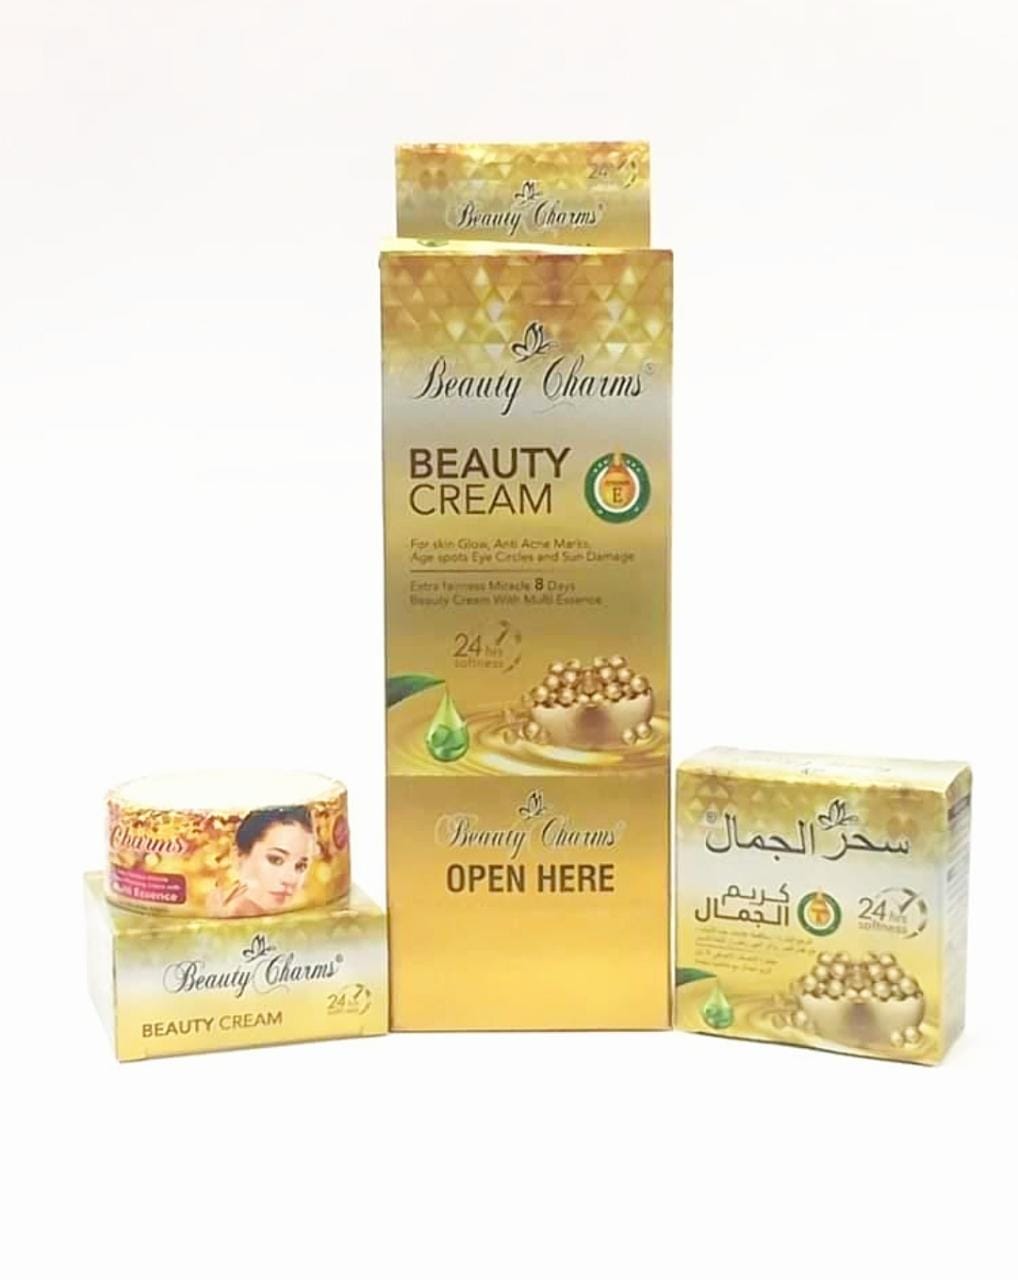 Beauty Charms New Beauty Cream Box